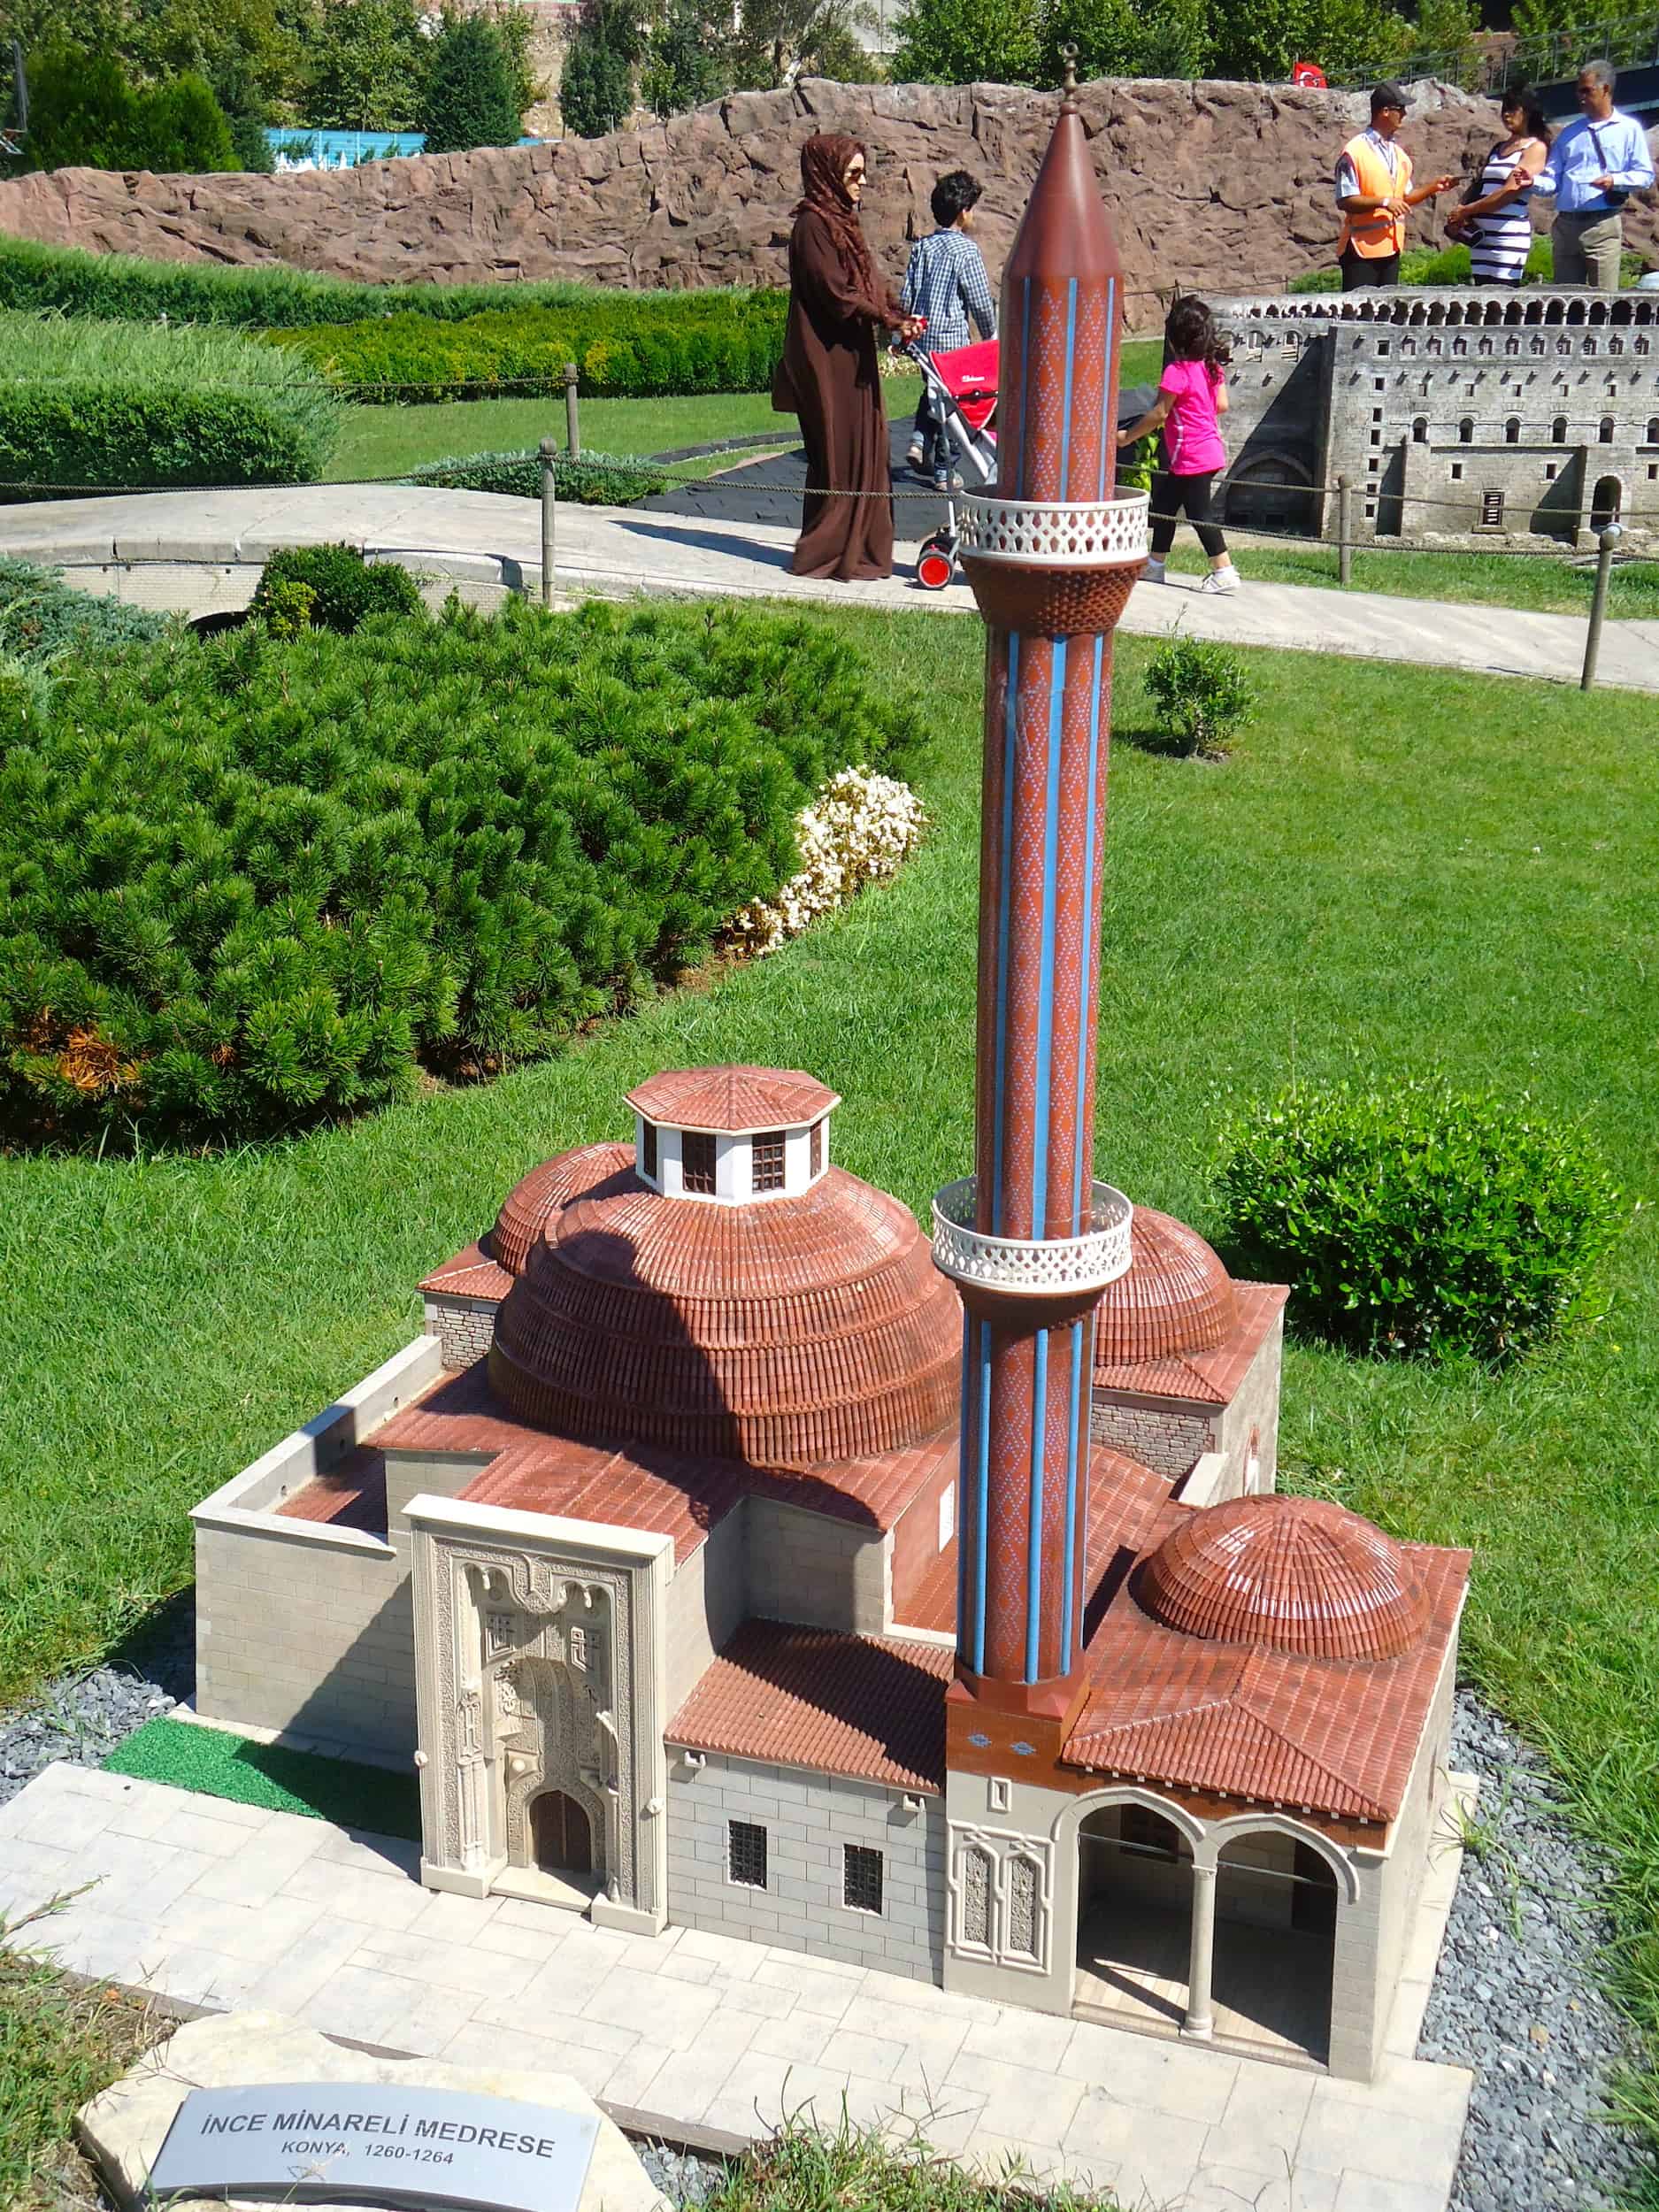 Model of the Ince Minareli Madrasa, Konya, 13th century